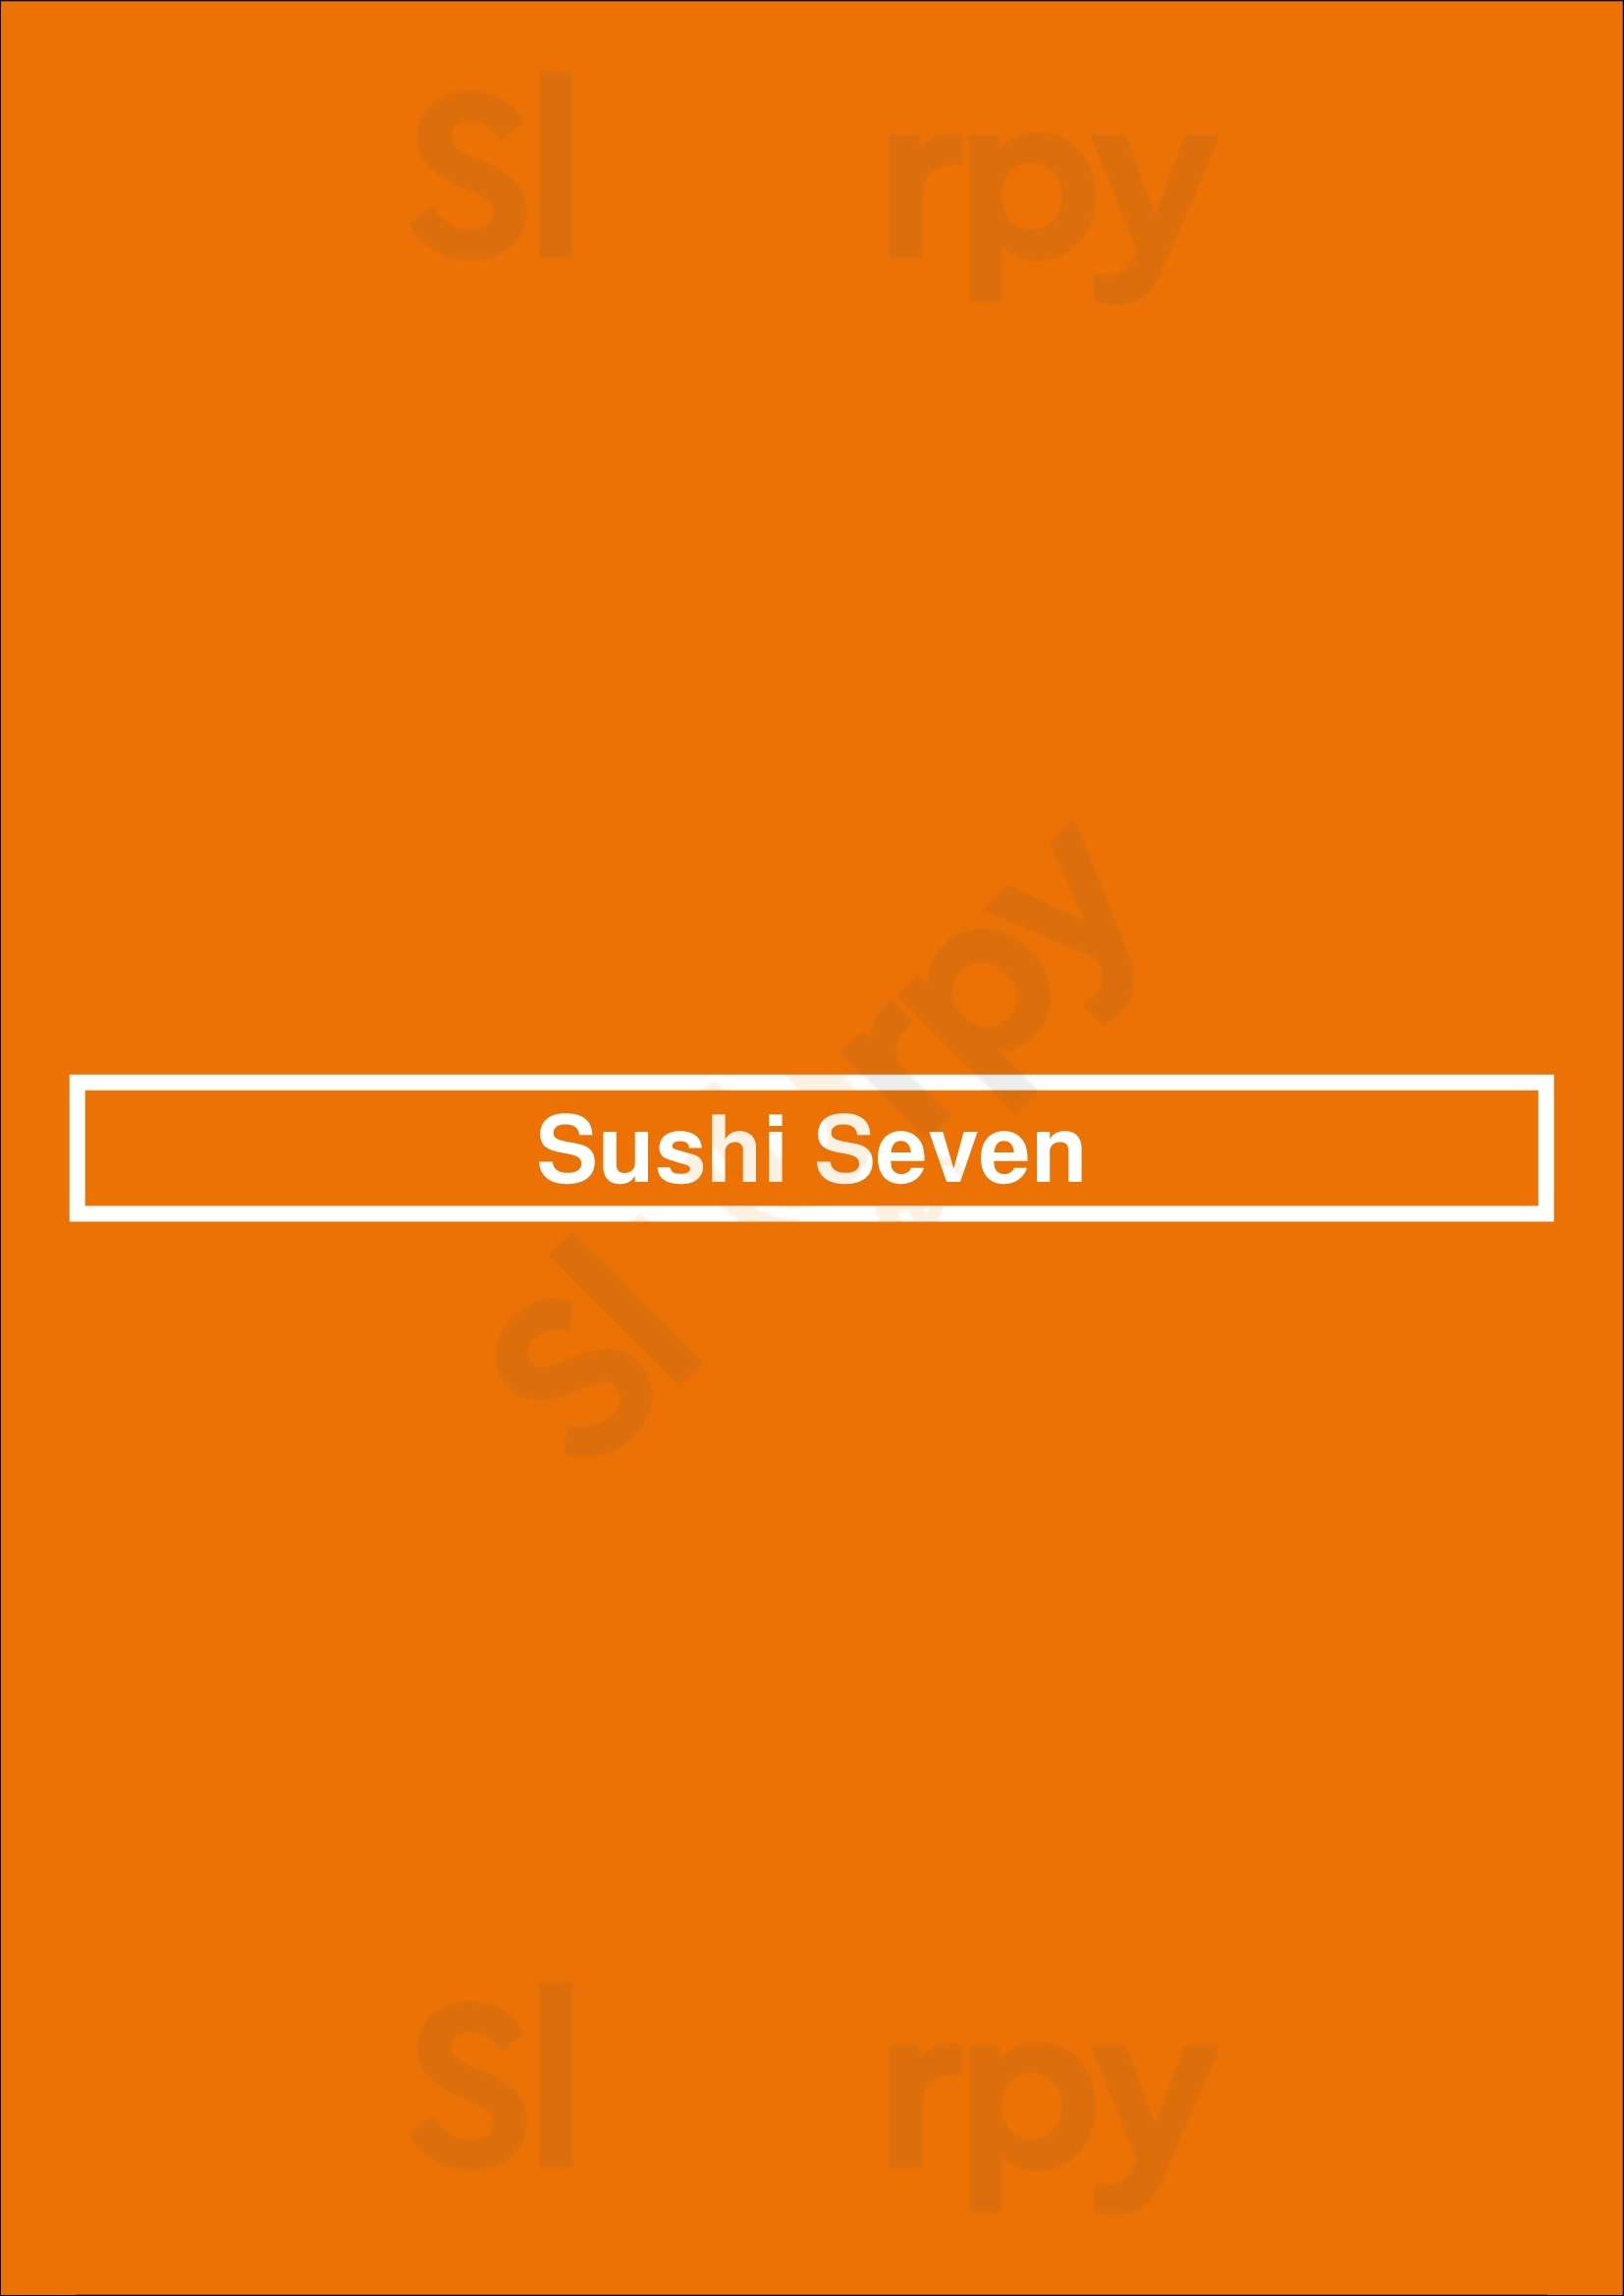 Sushi Seven San Antonio Menu - 1